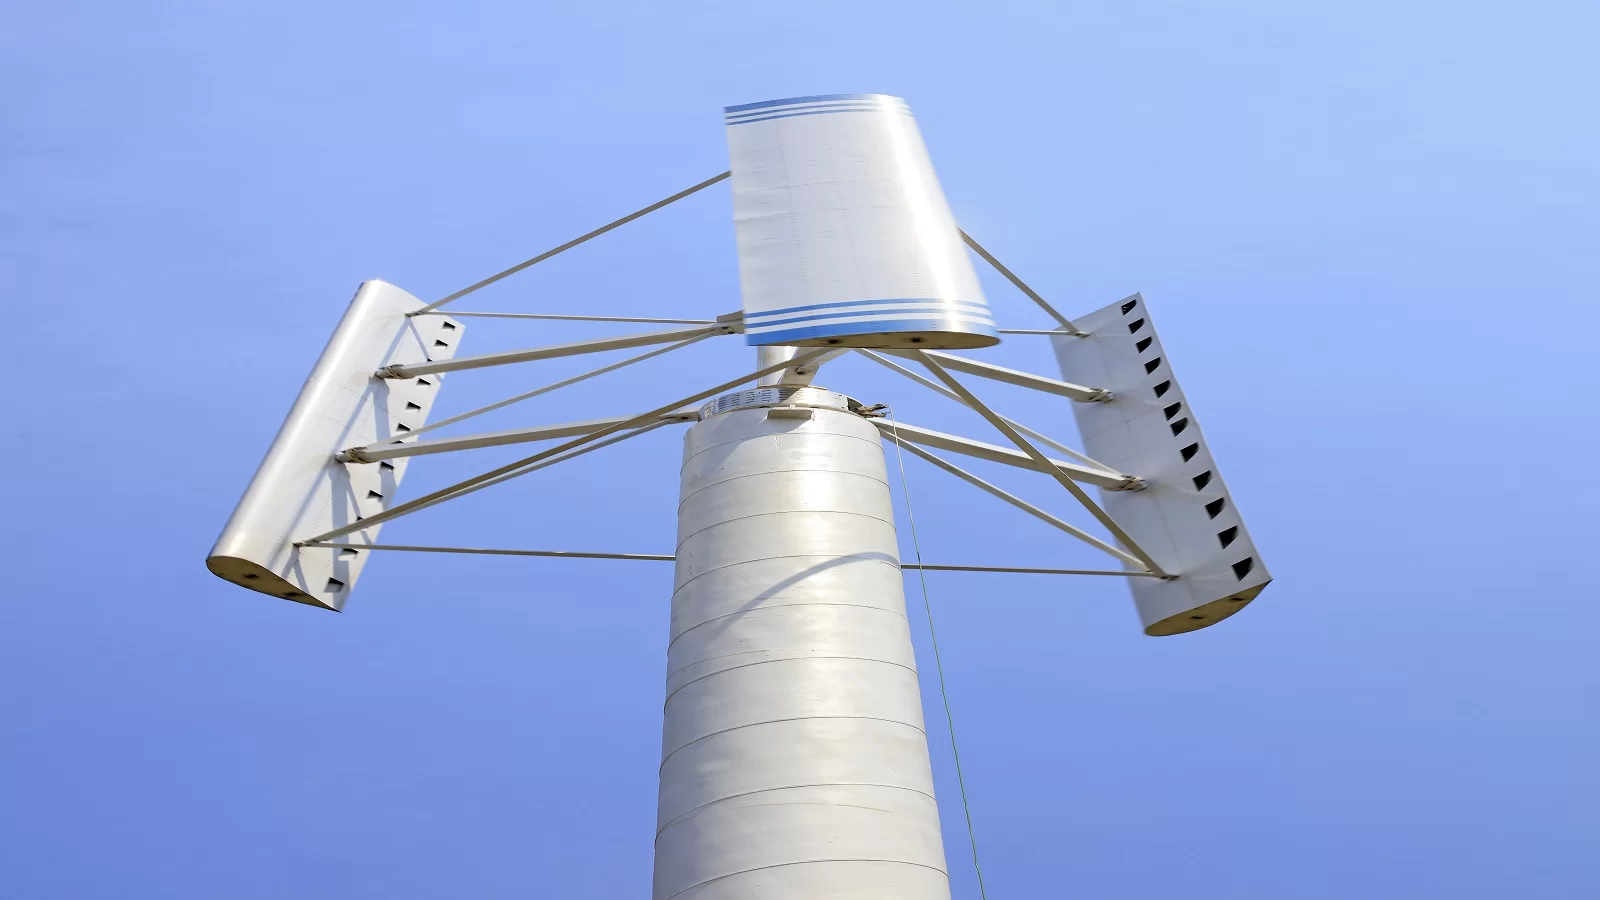 Vertical Axis Wind Turbine — Part 1